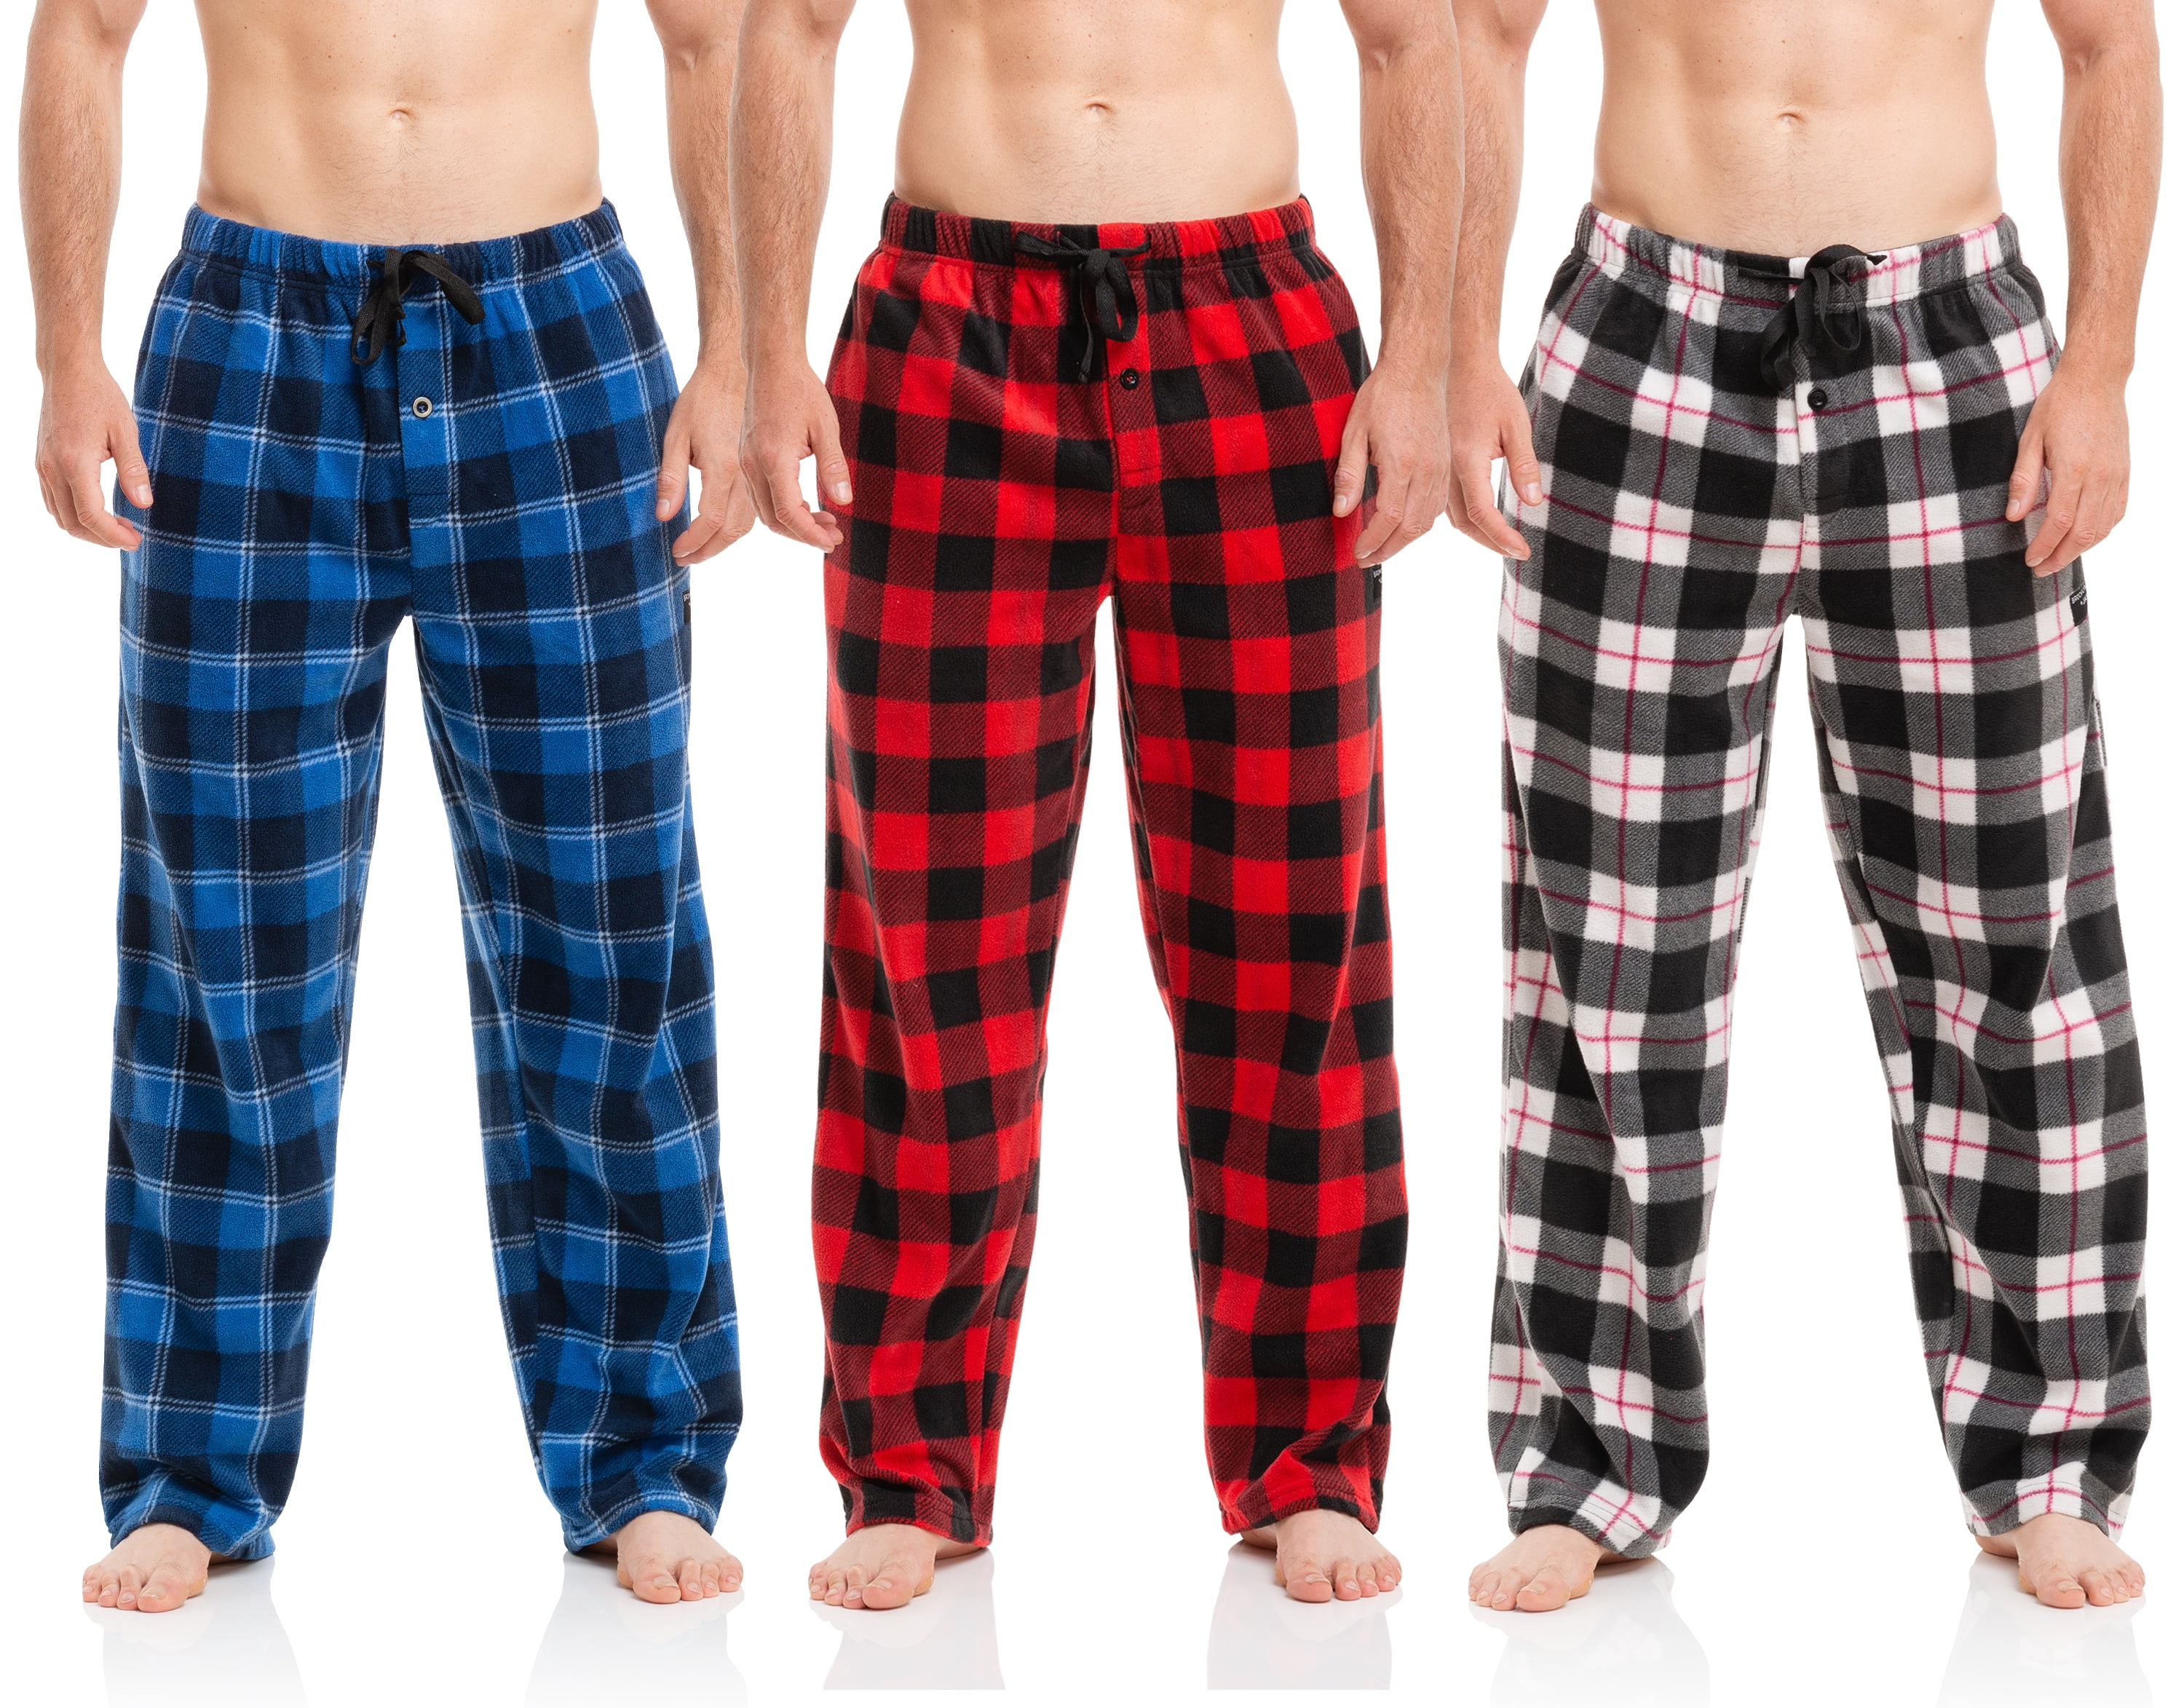 Brooklyn-Jax Men's Microfleece Pajama in L size and pack of 3 - Walmart.com